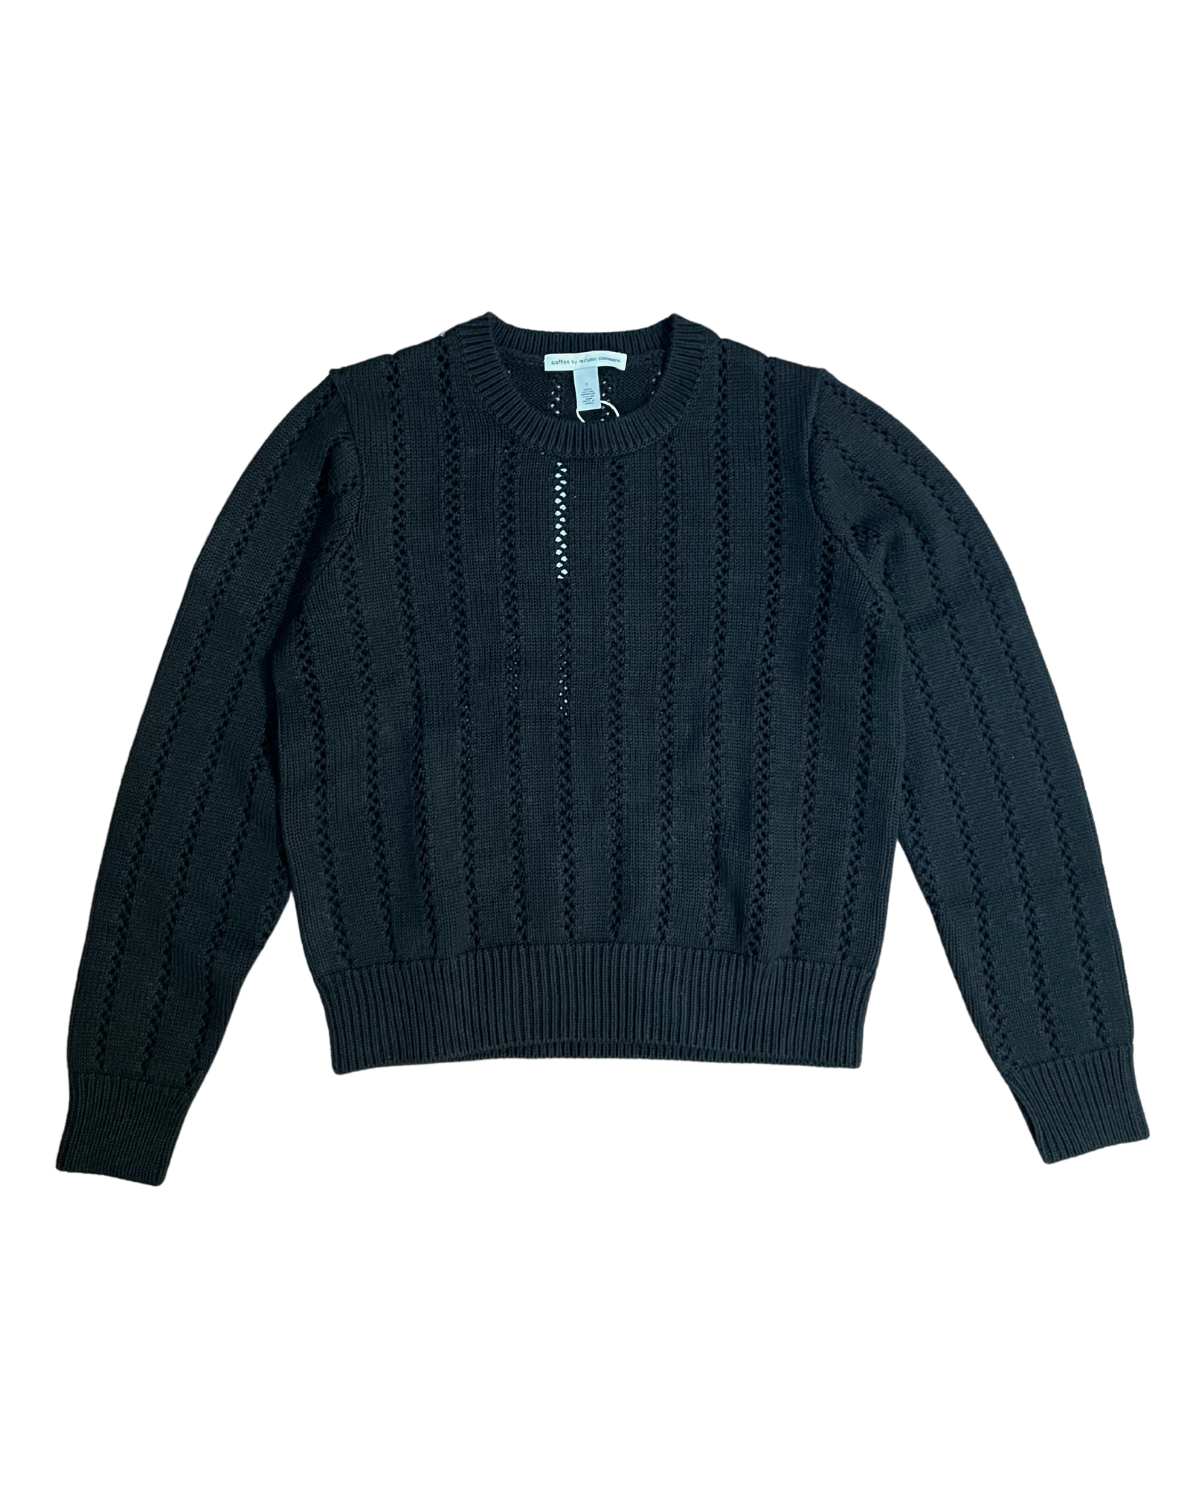 Pointelle Crewneck Sweater (Black)